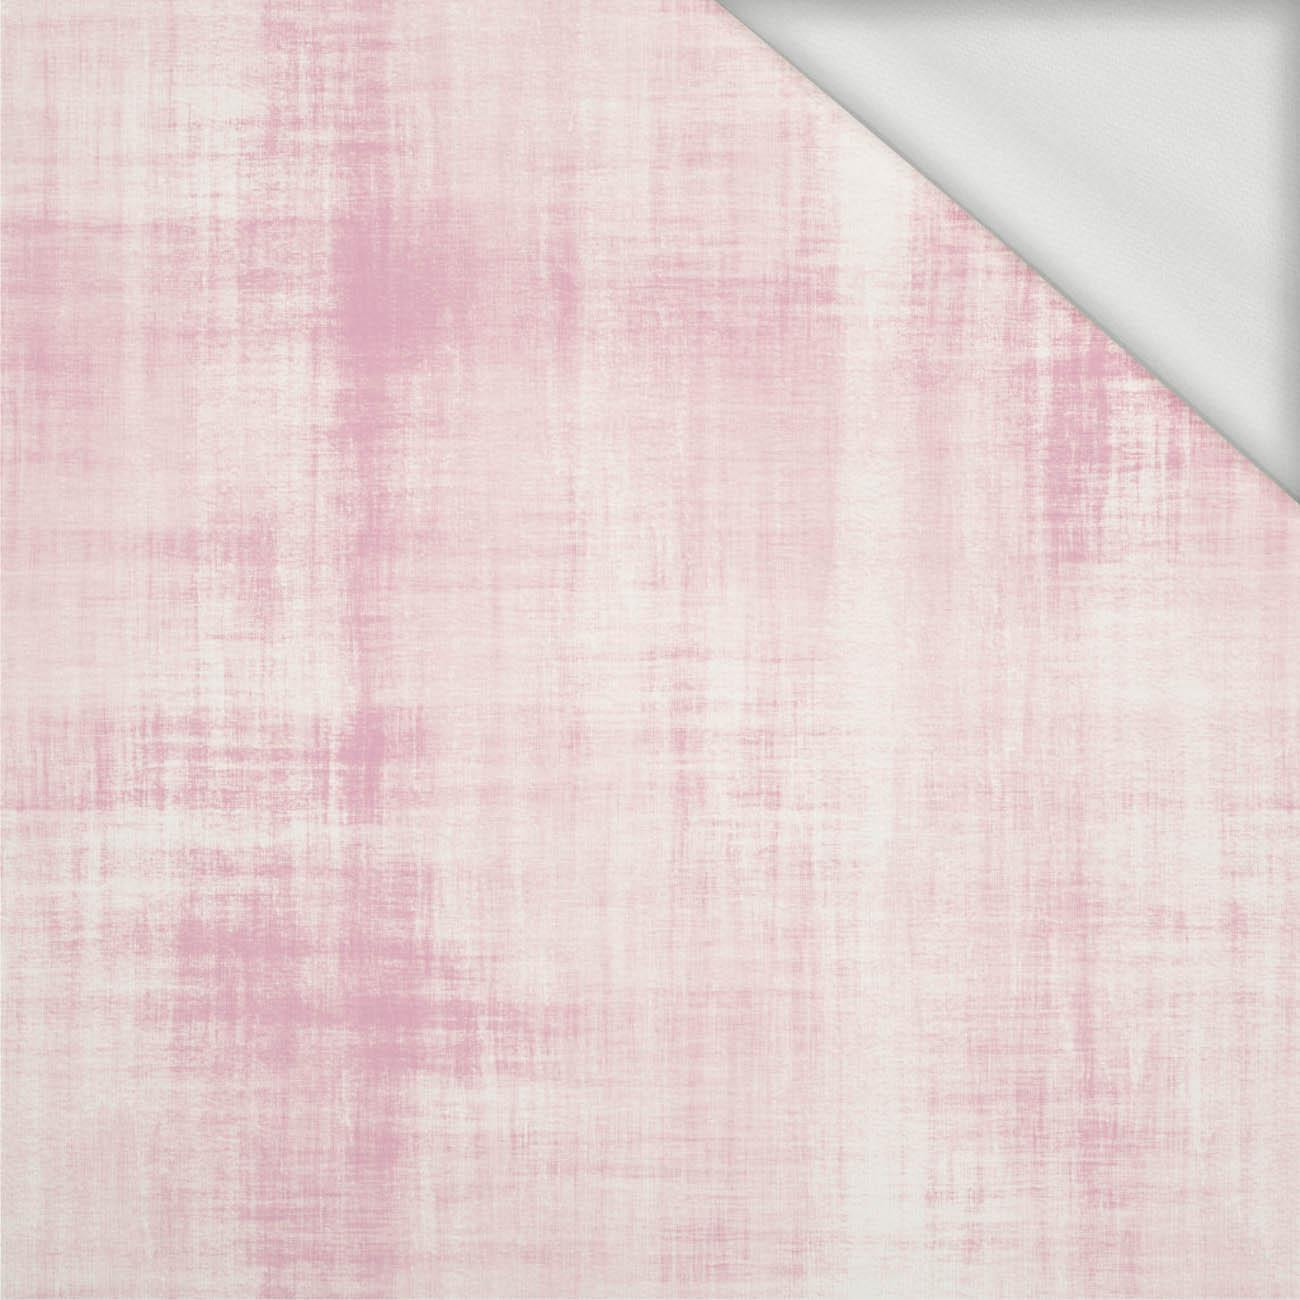 ACID WASH PAT. 2 (pale pink) - looped knit fabric